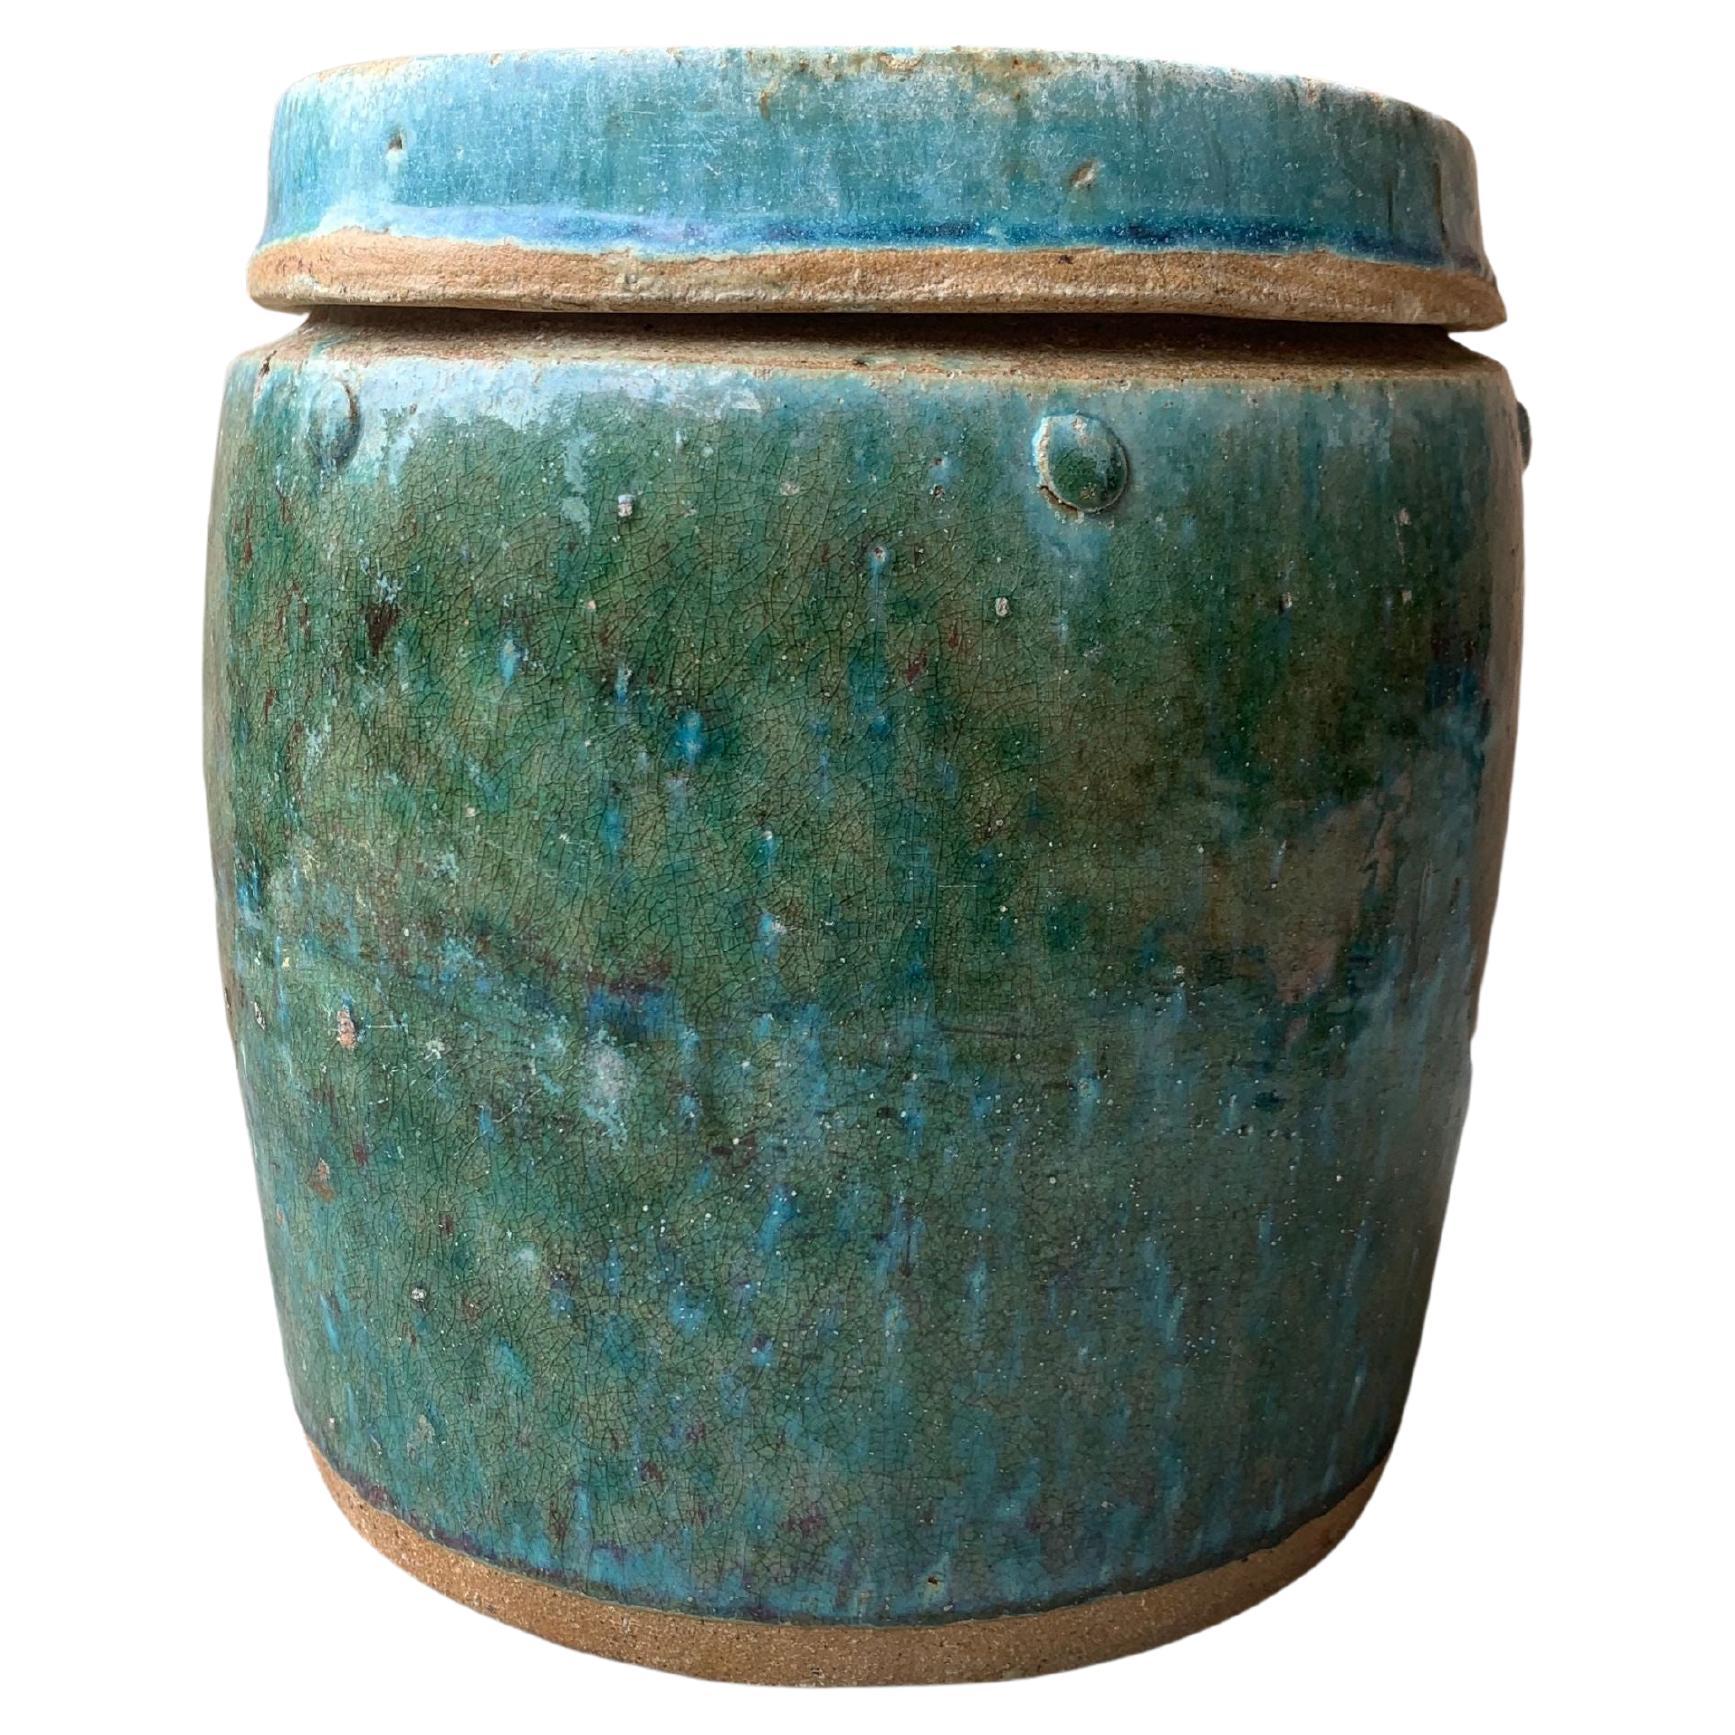 Chinese Shiwan Green Glazed Ceramic Jar / Planter, c. 1900 For Sale